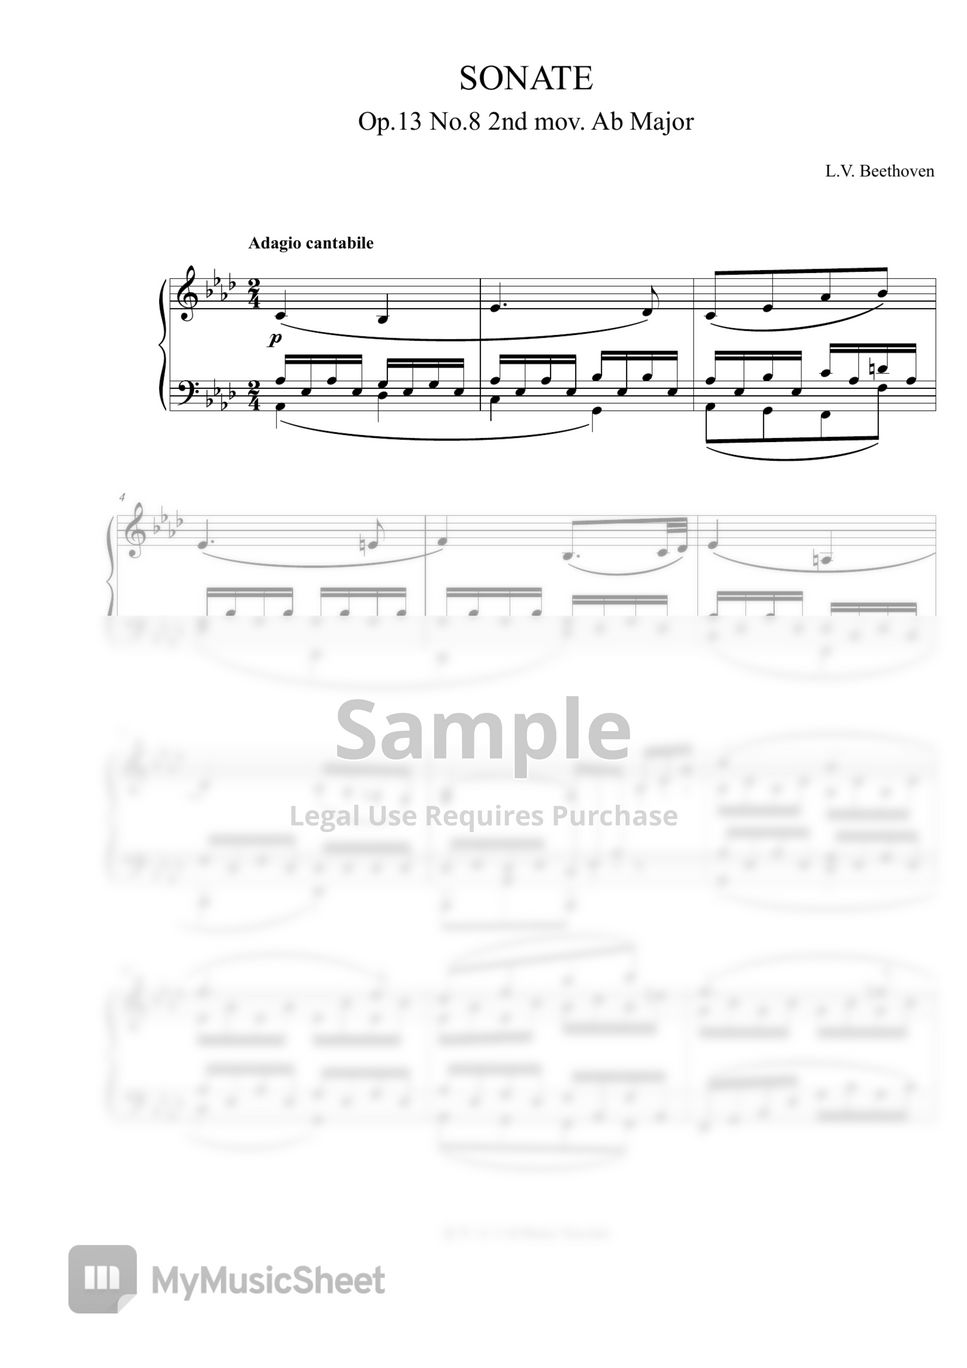 L. V. Beethoven - Beethoven Sonata Op.13 No.8 2nd mov. by 음악 나그네Music Traveler